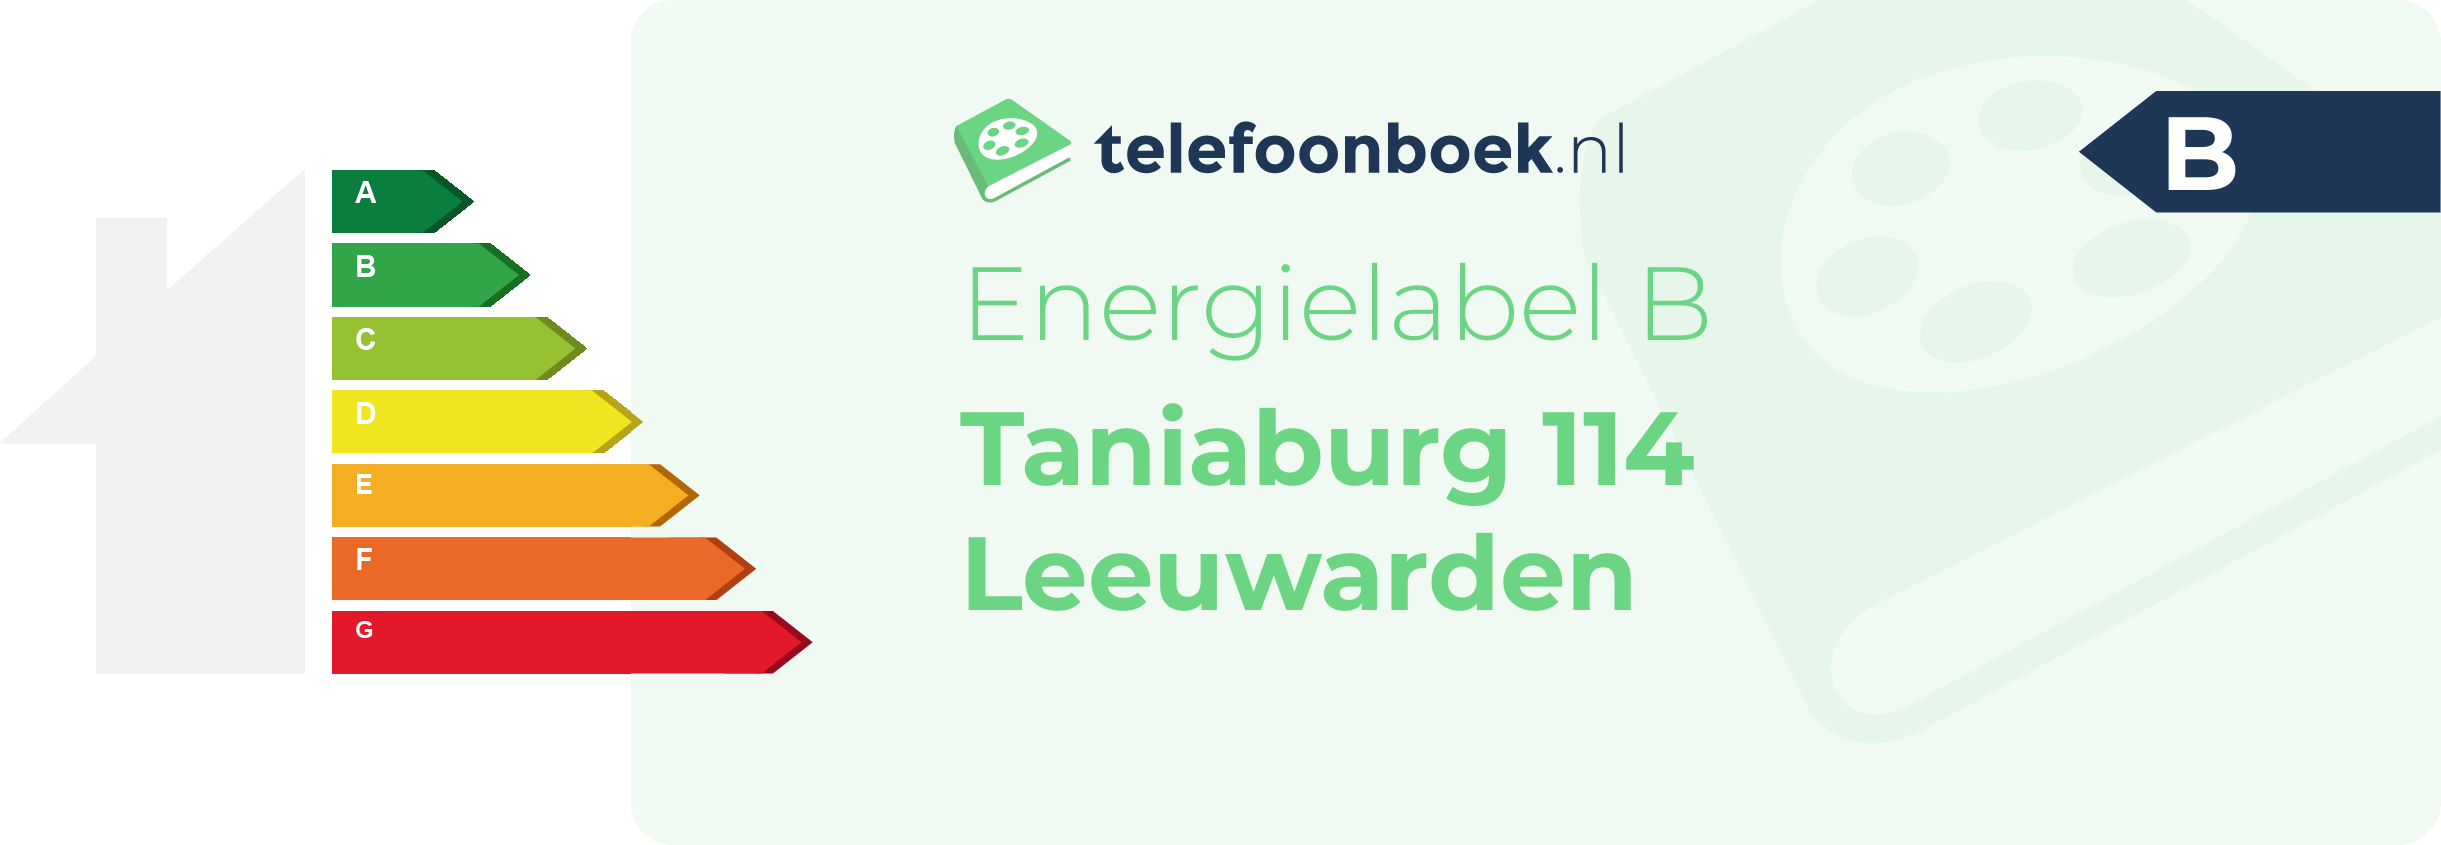 Energielabel Taniaburg 114 Leeuwarden